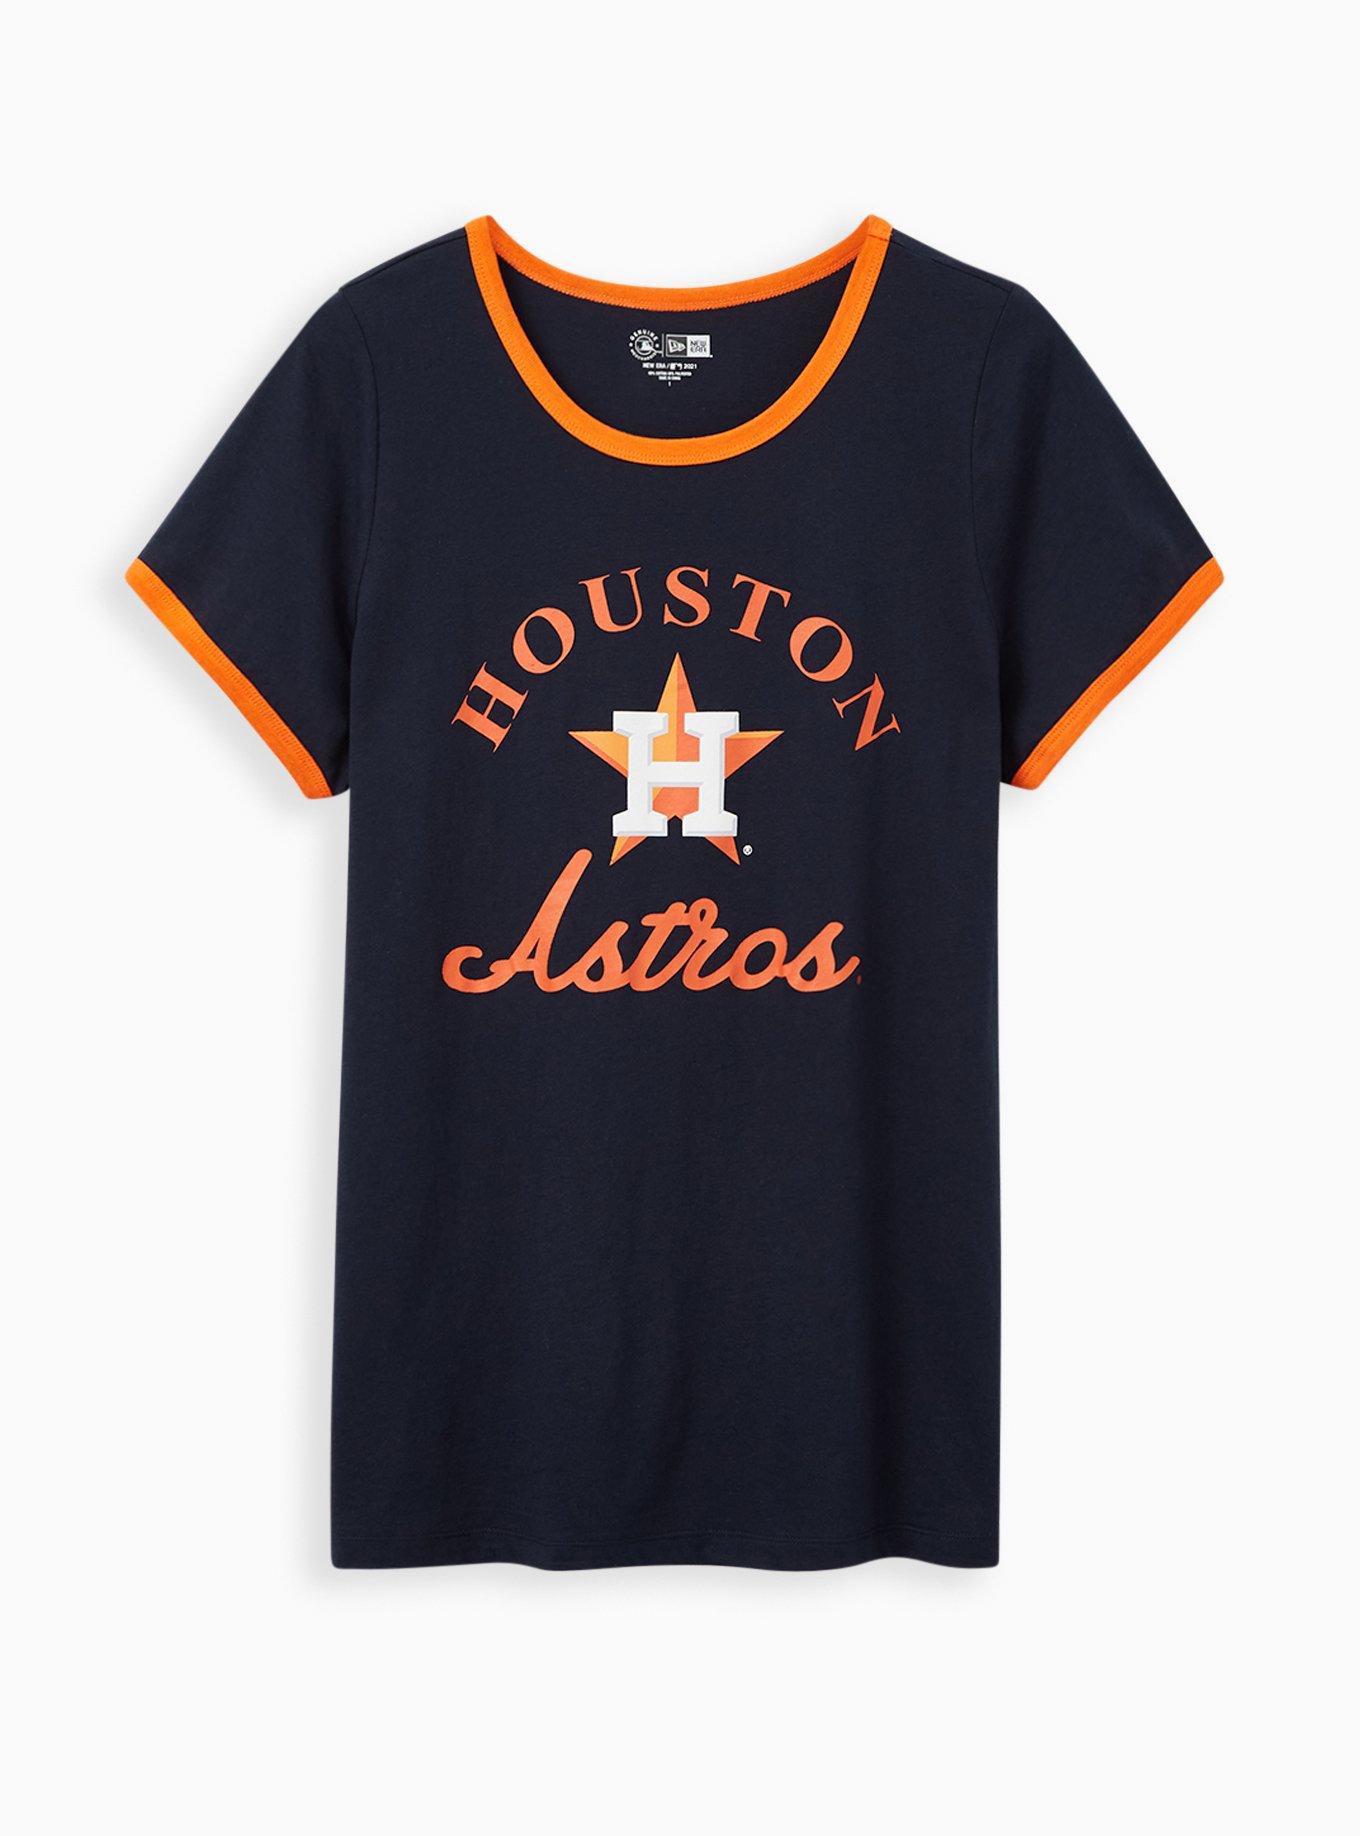 Vintage Houston Astros Texas Ringer Shirt